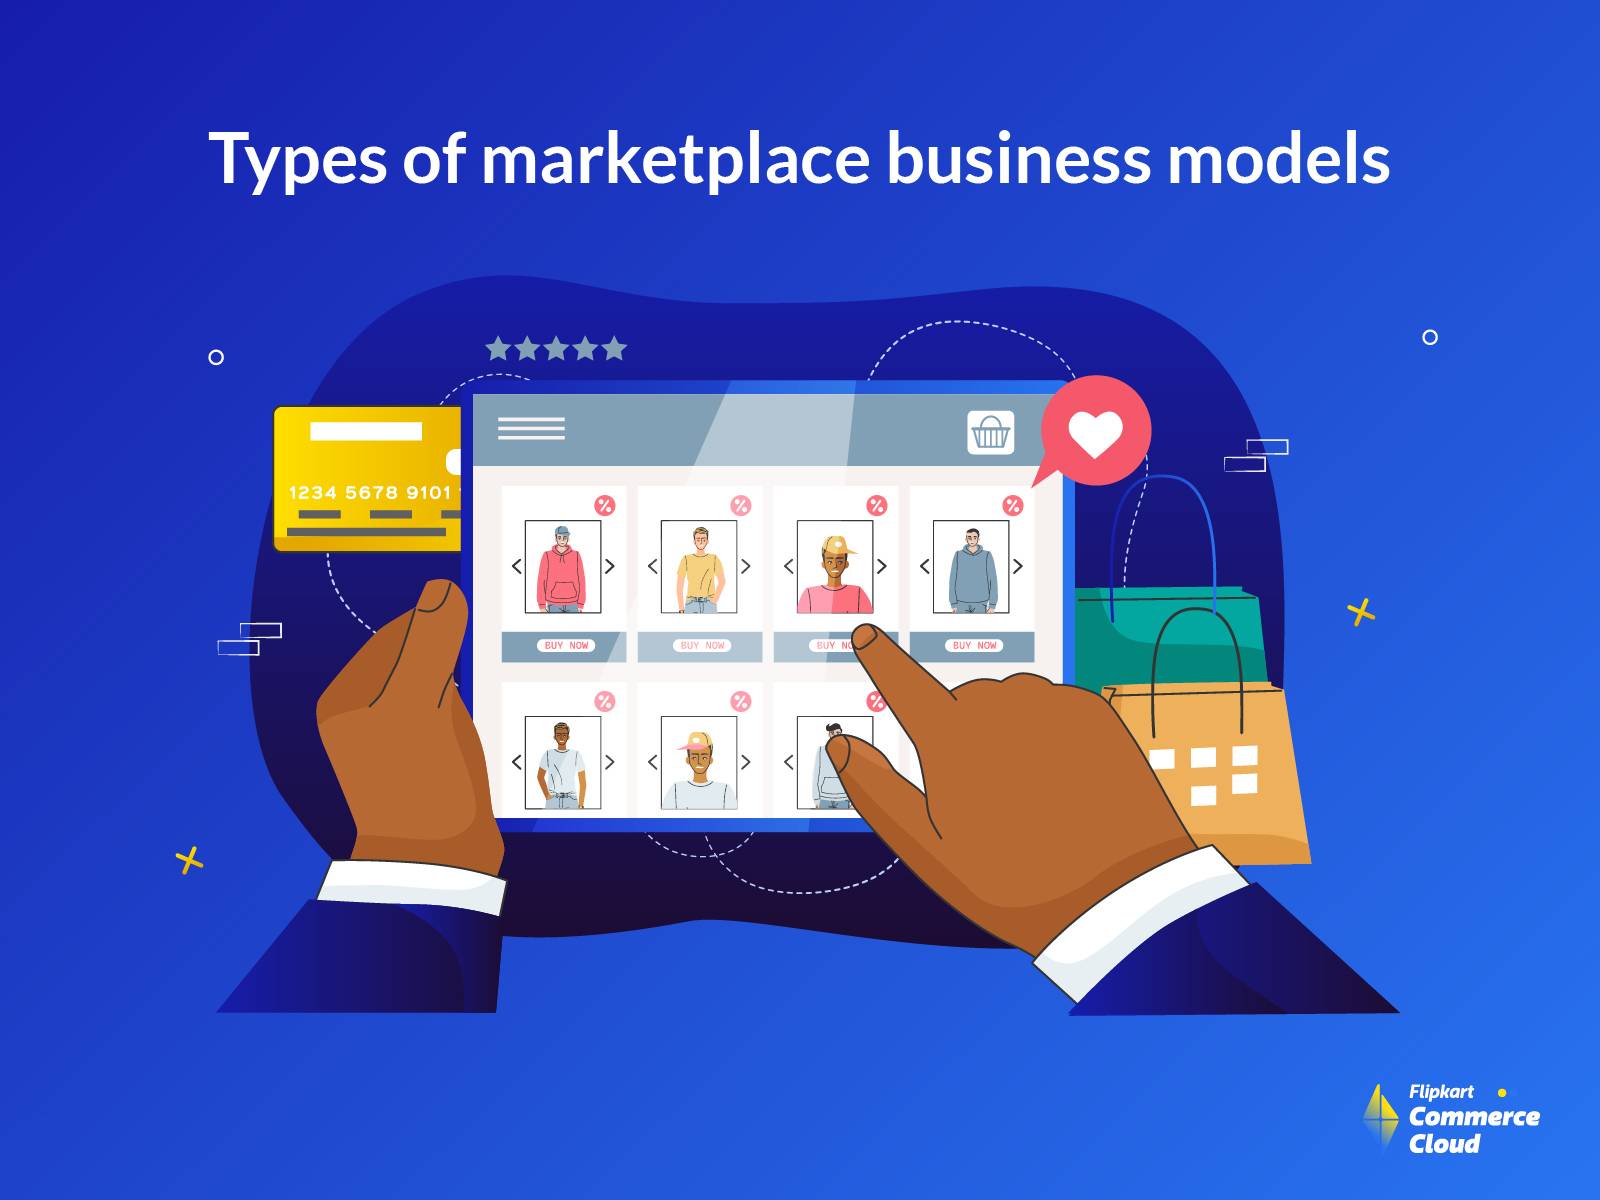 Marketplace business models